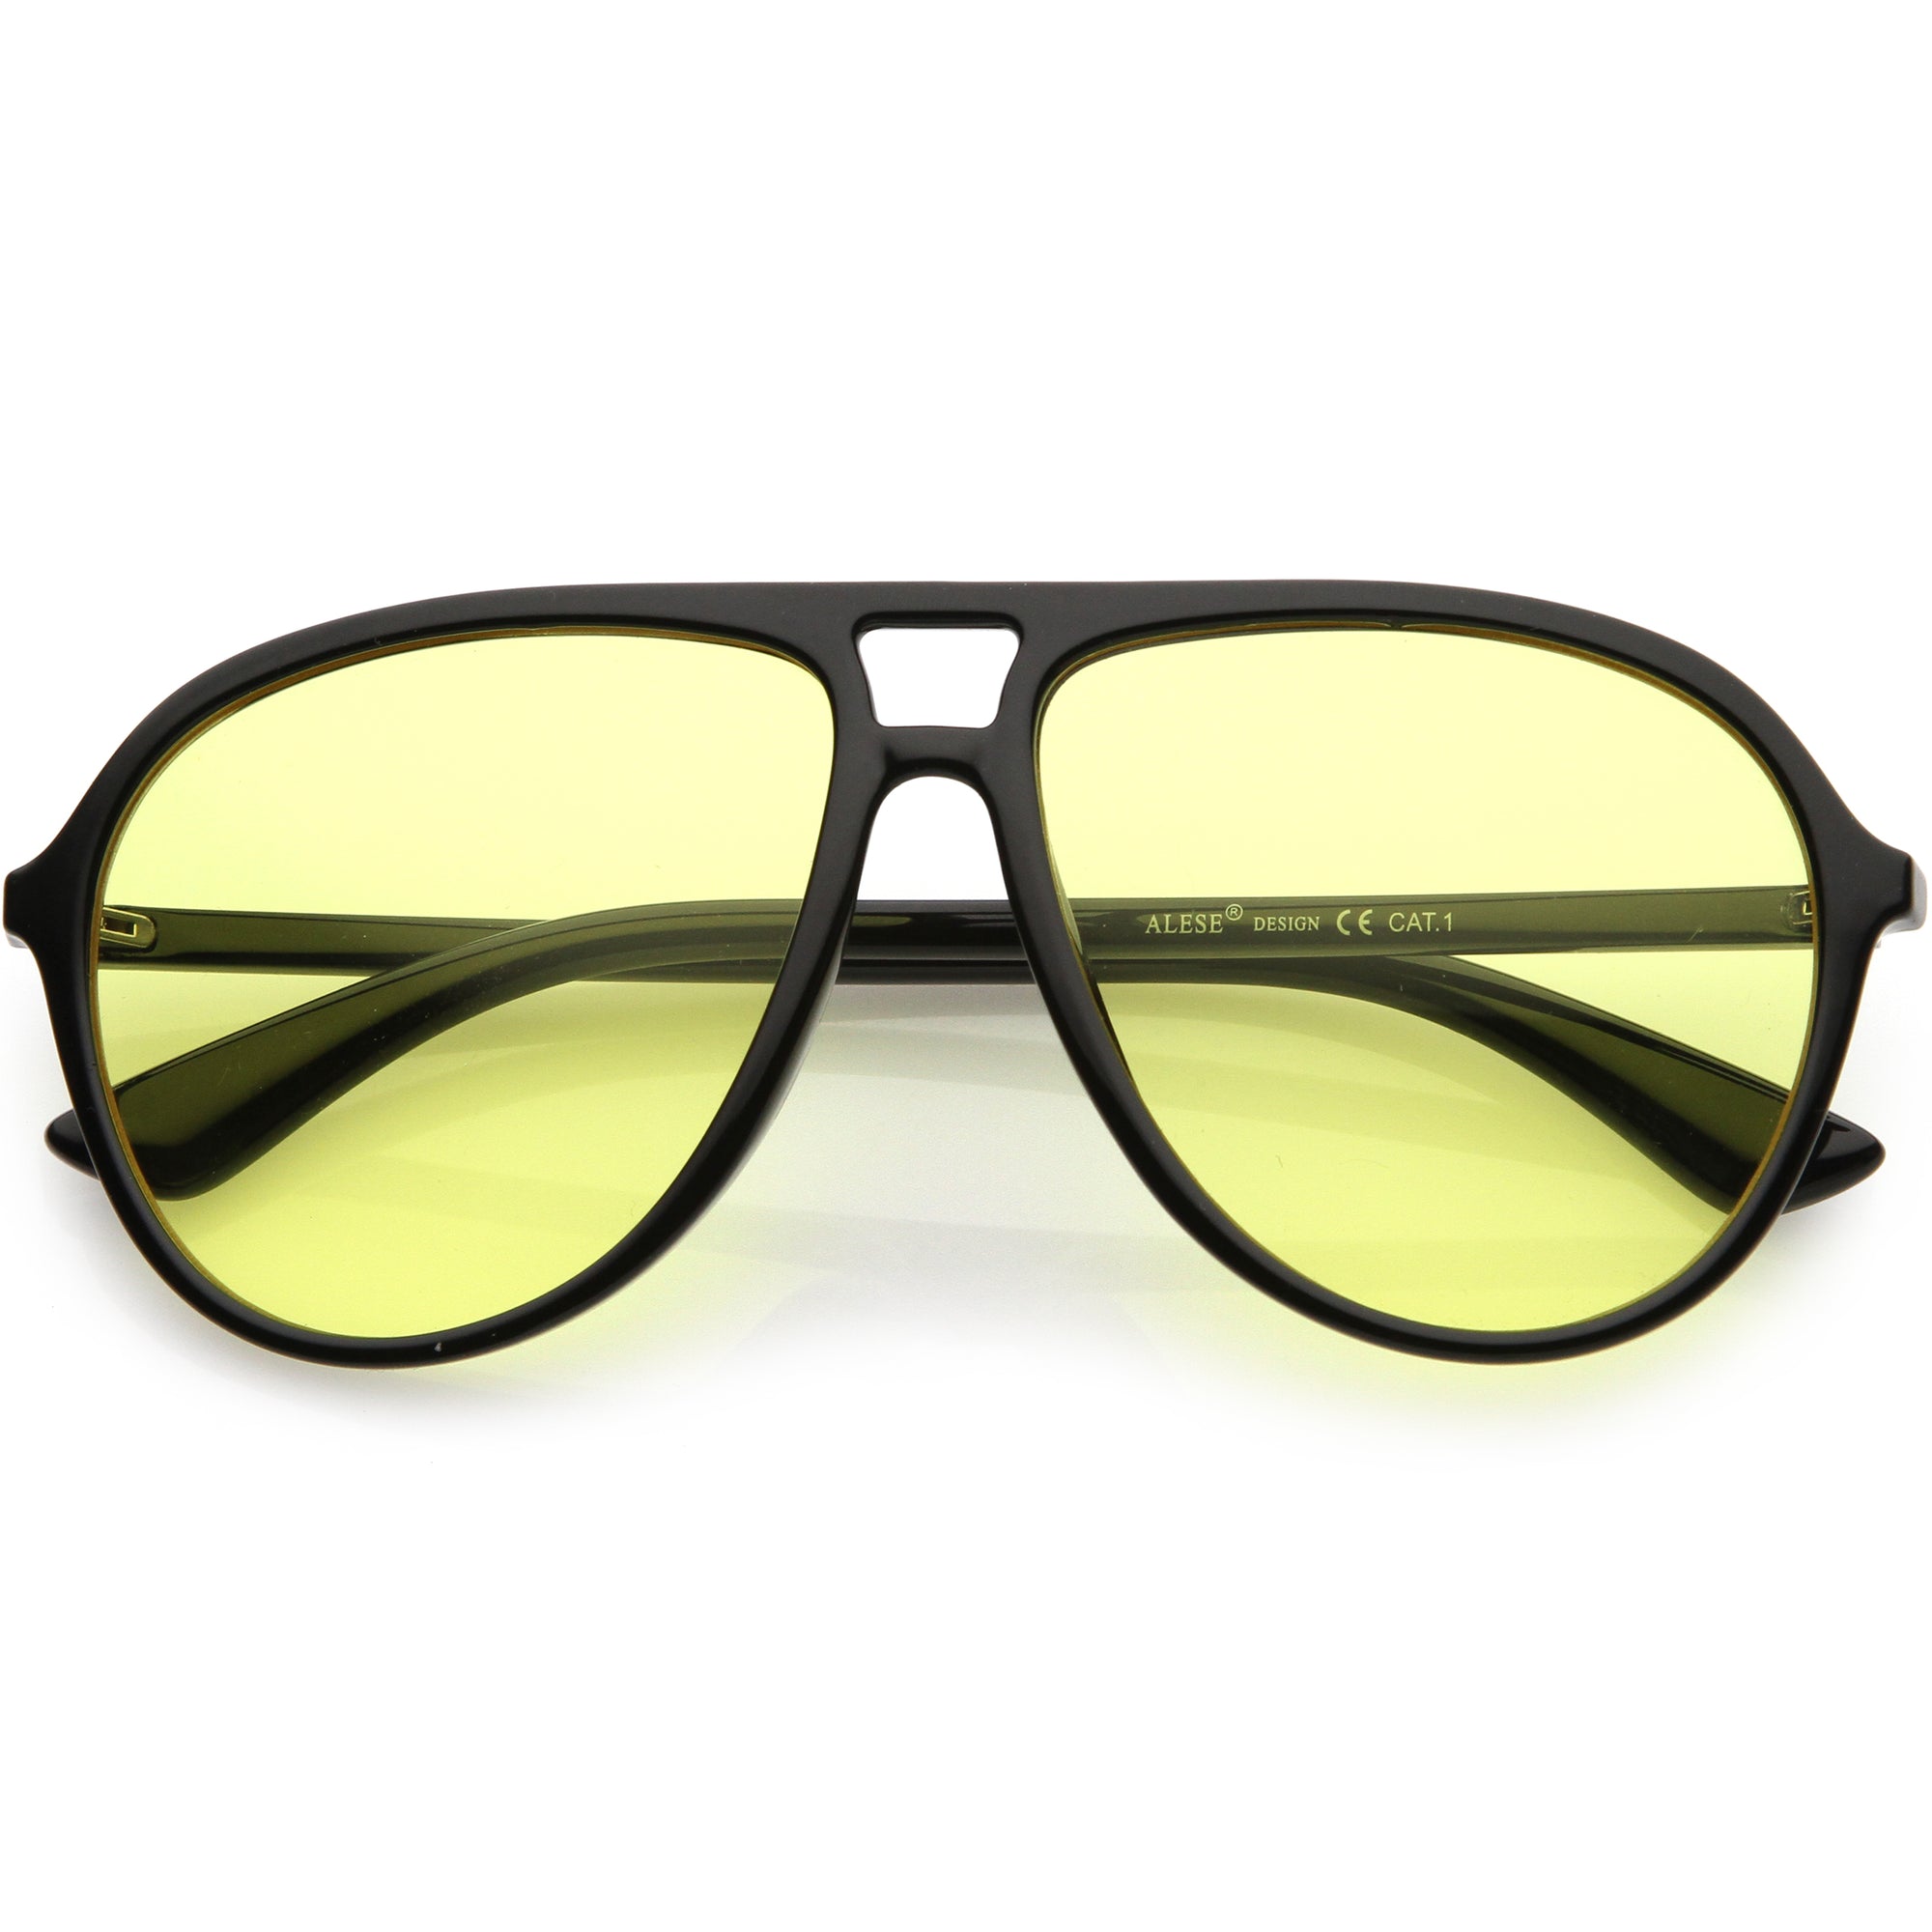 Classic 80s Inspired Color Tinted Lens Retro Aviator Sunglasses Zerouv